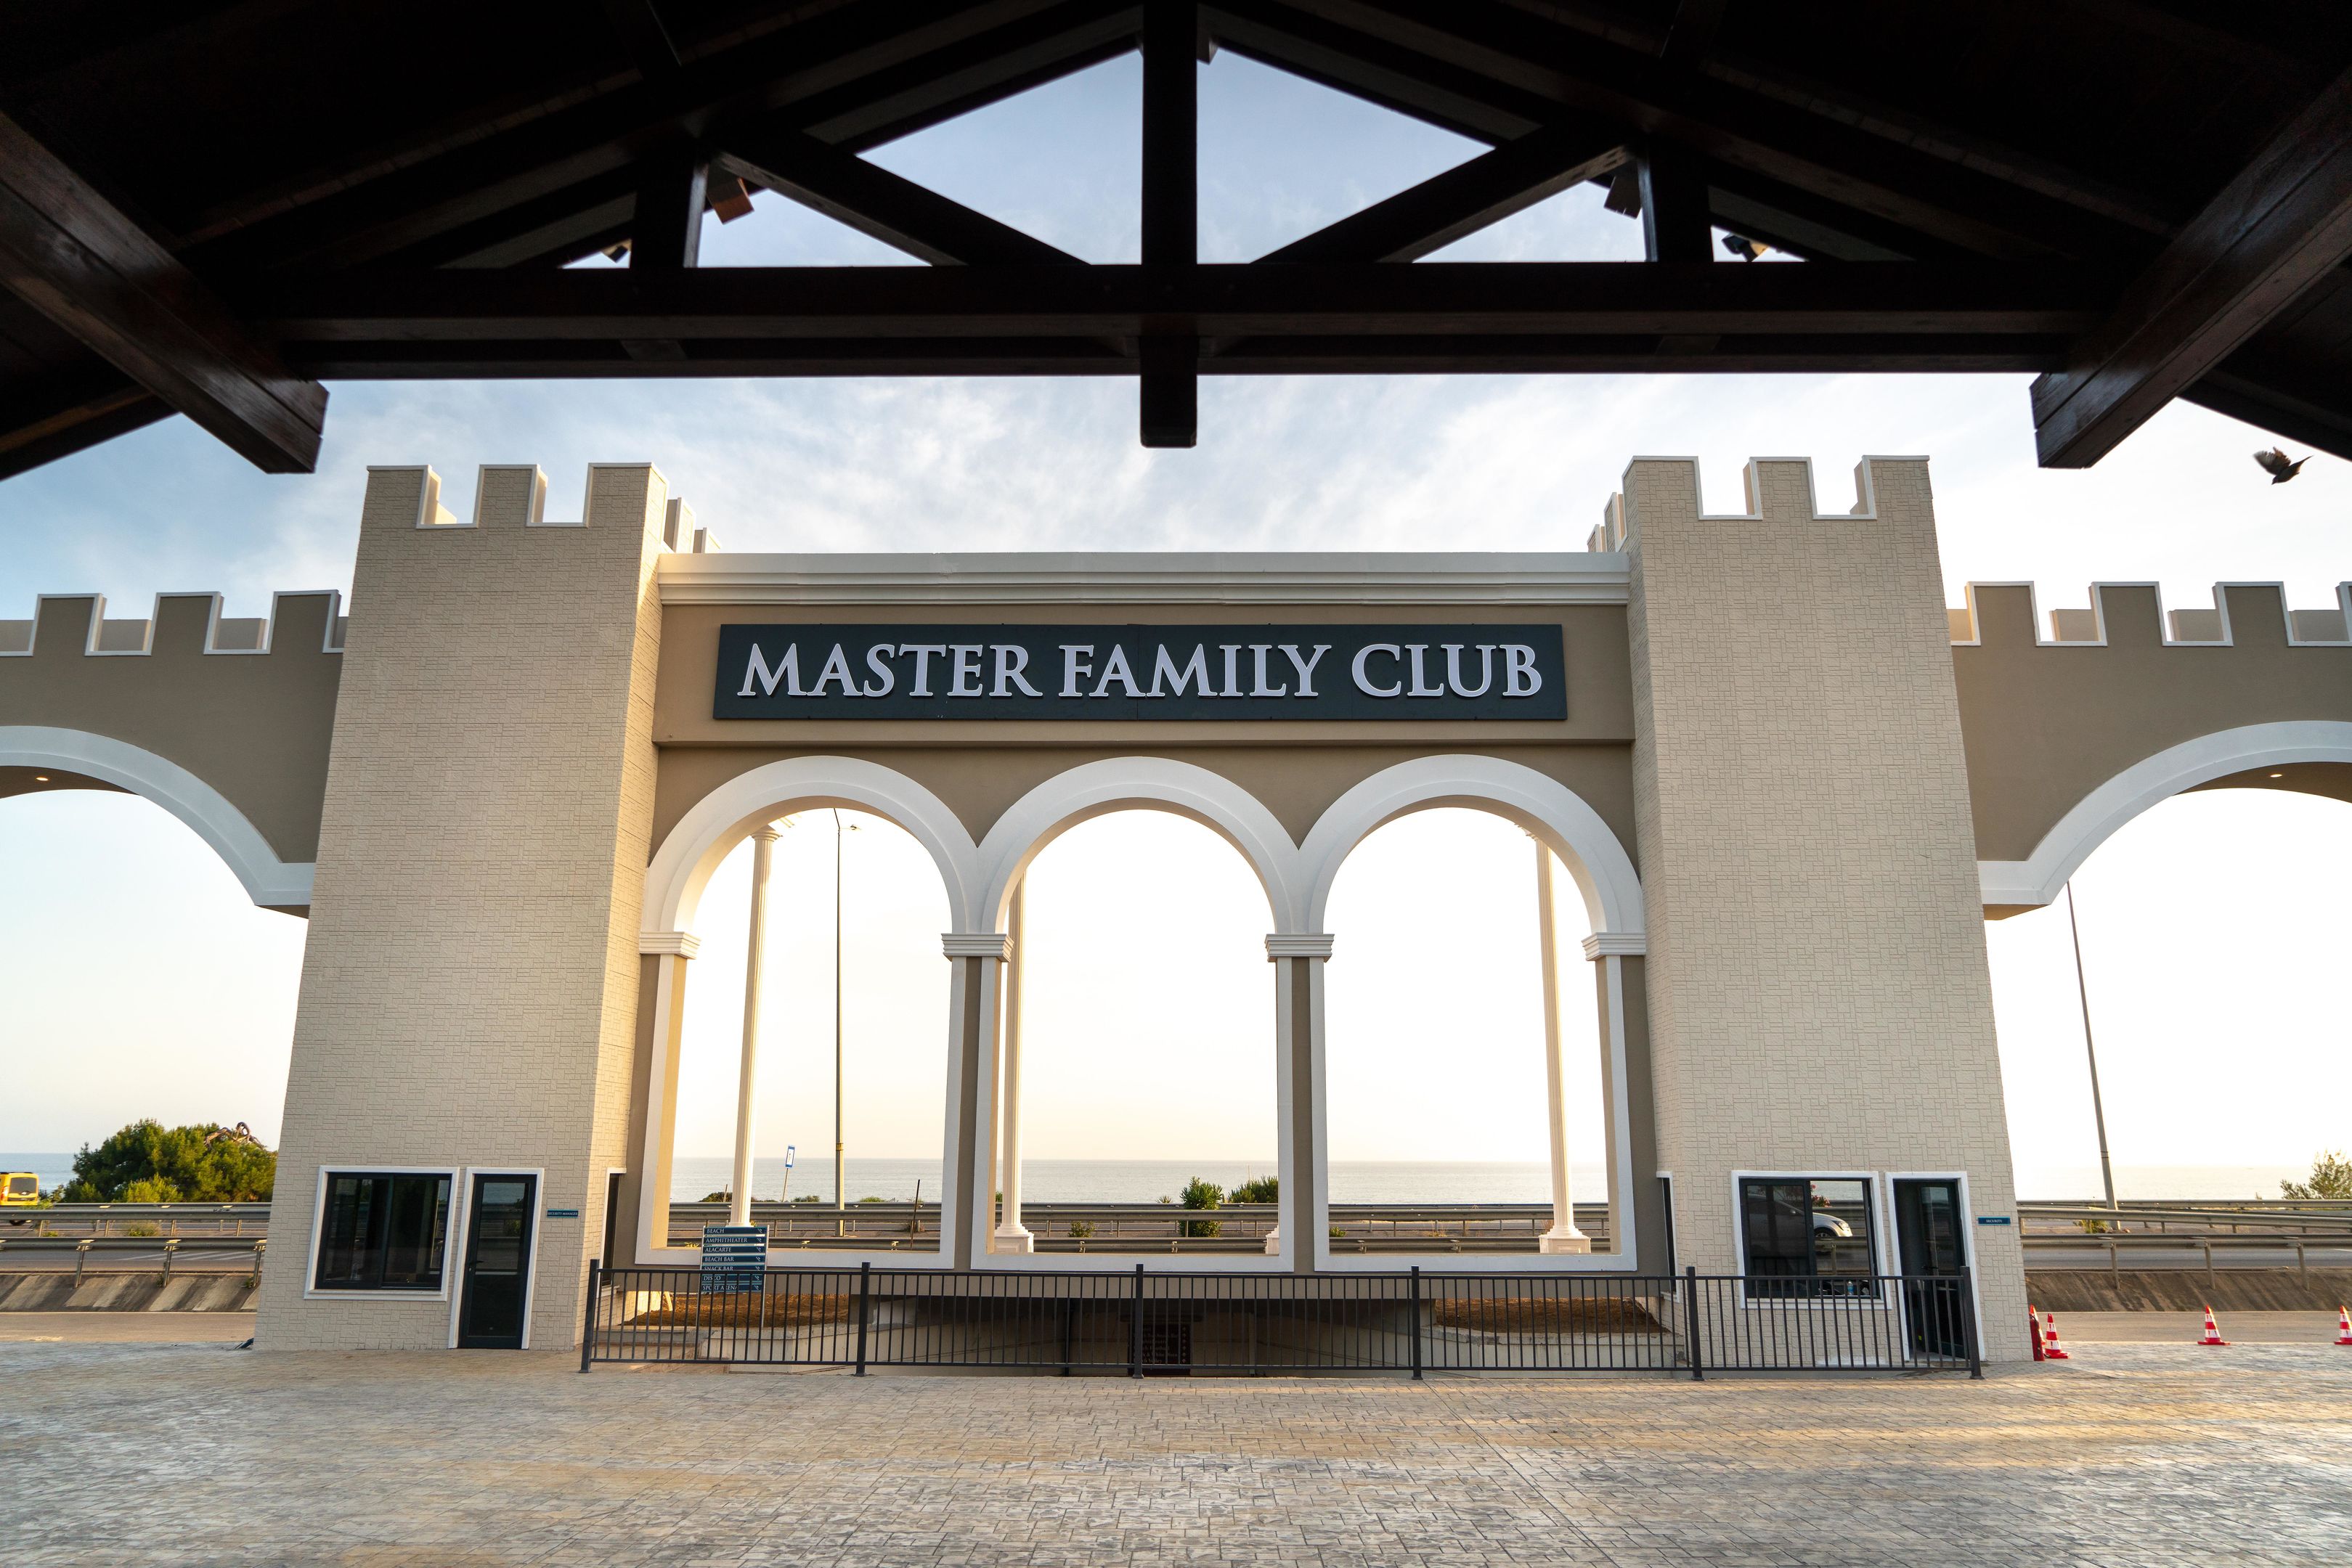 MASTER FAMILY CLUB